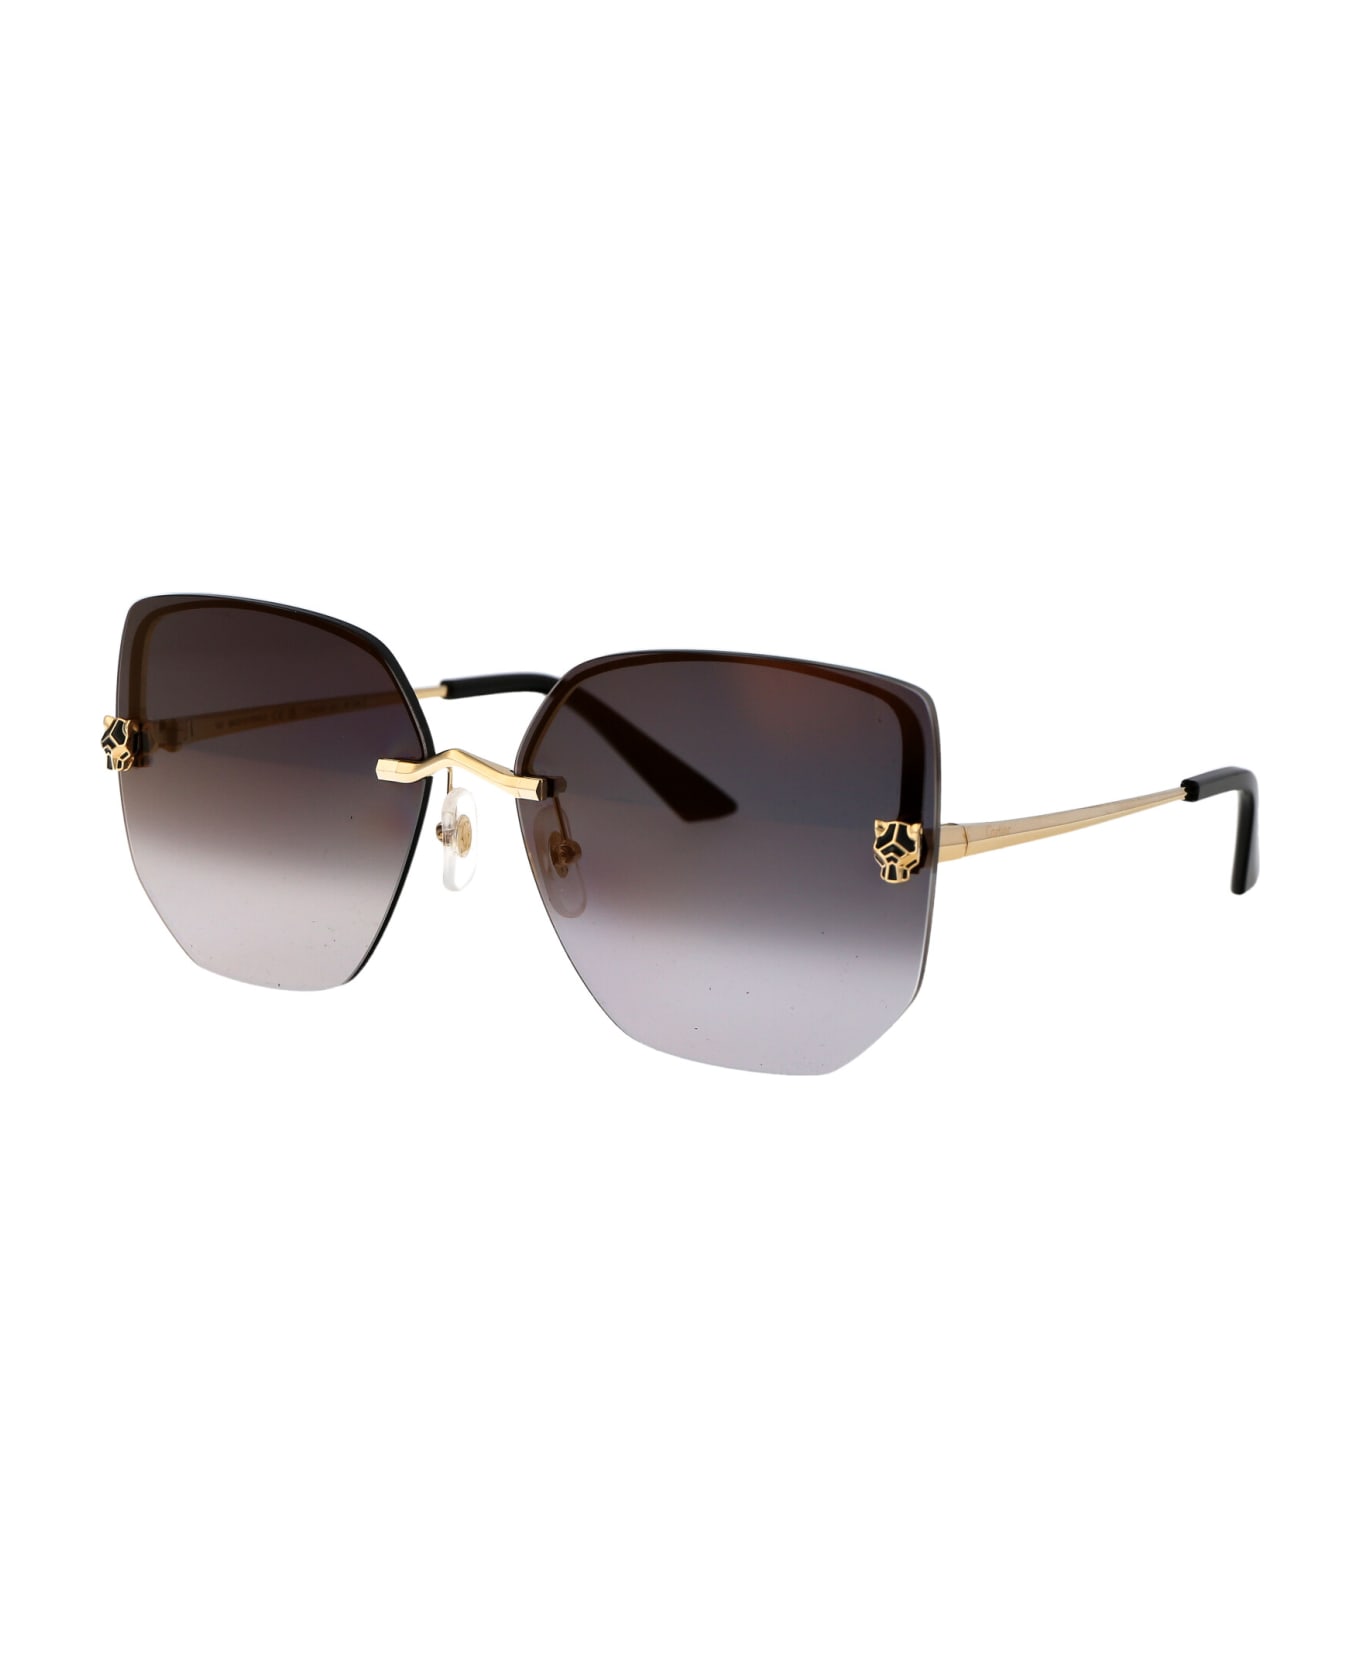 Cartier Eyewear Ct0432s Sunglasses - 001 GOLD GOLD GREY